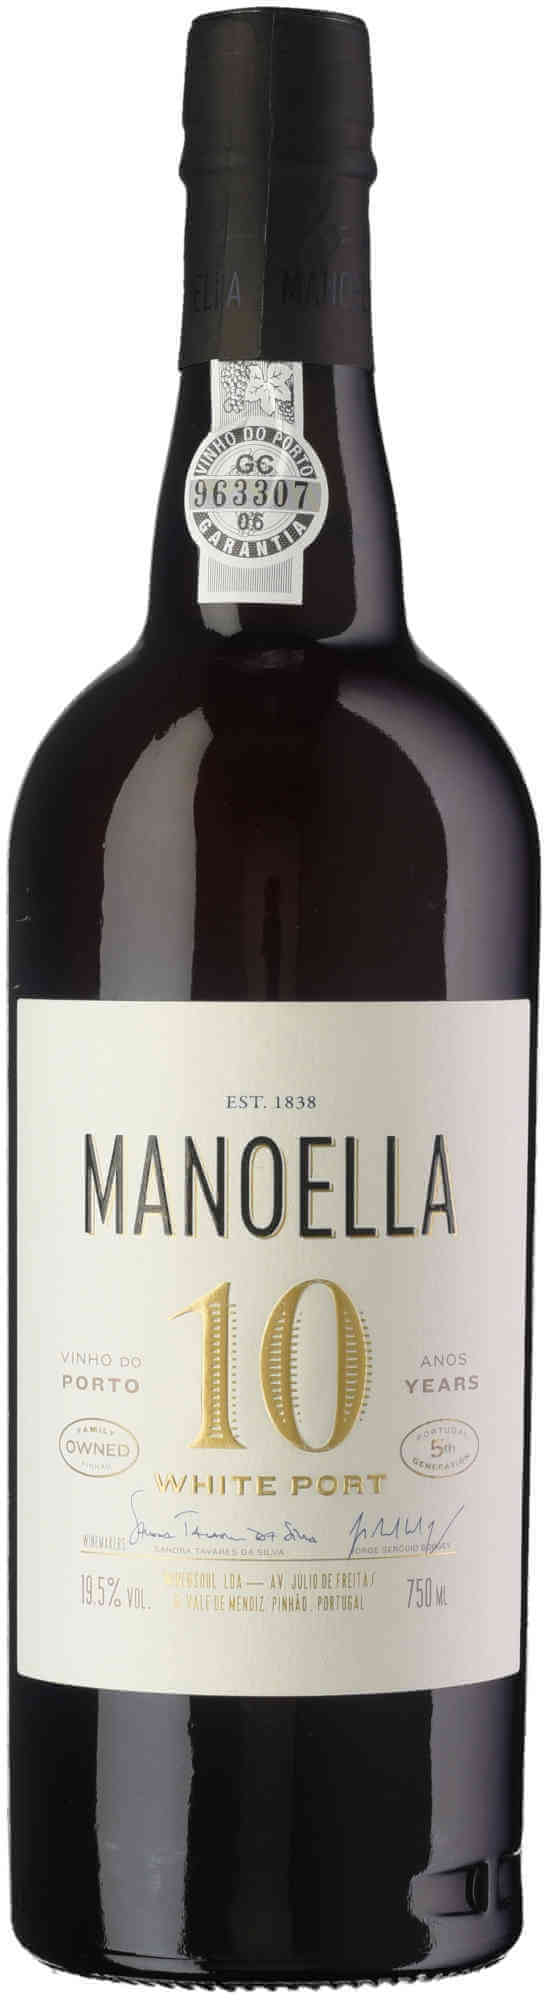 Manoella-10-Yers-Old-White-Port